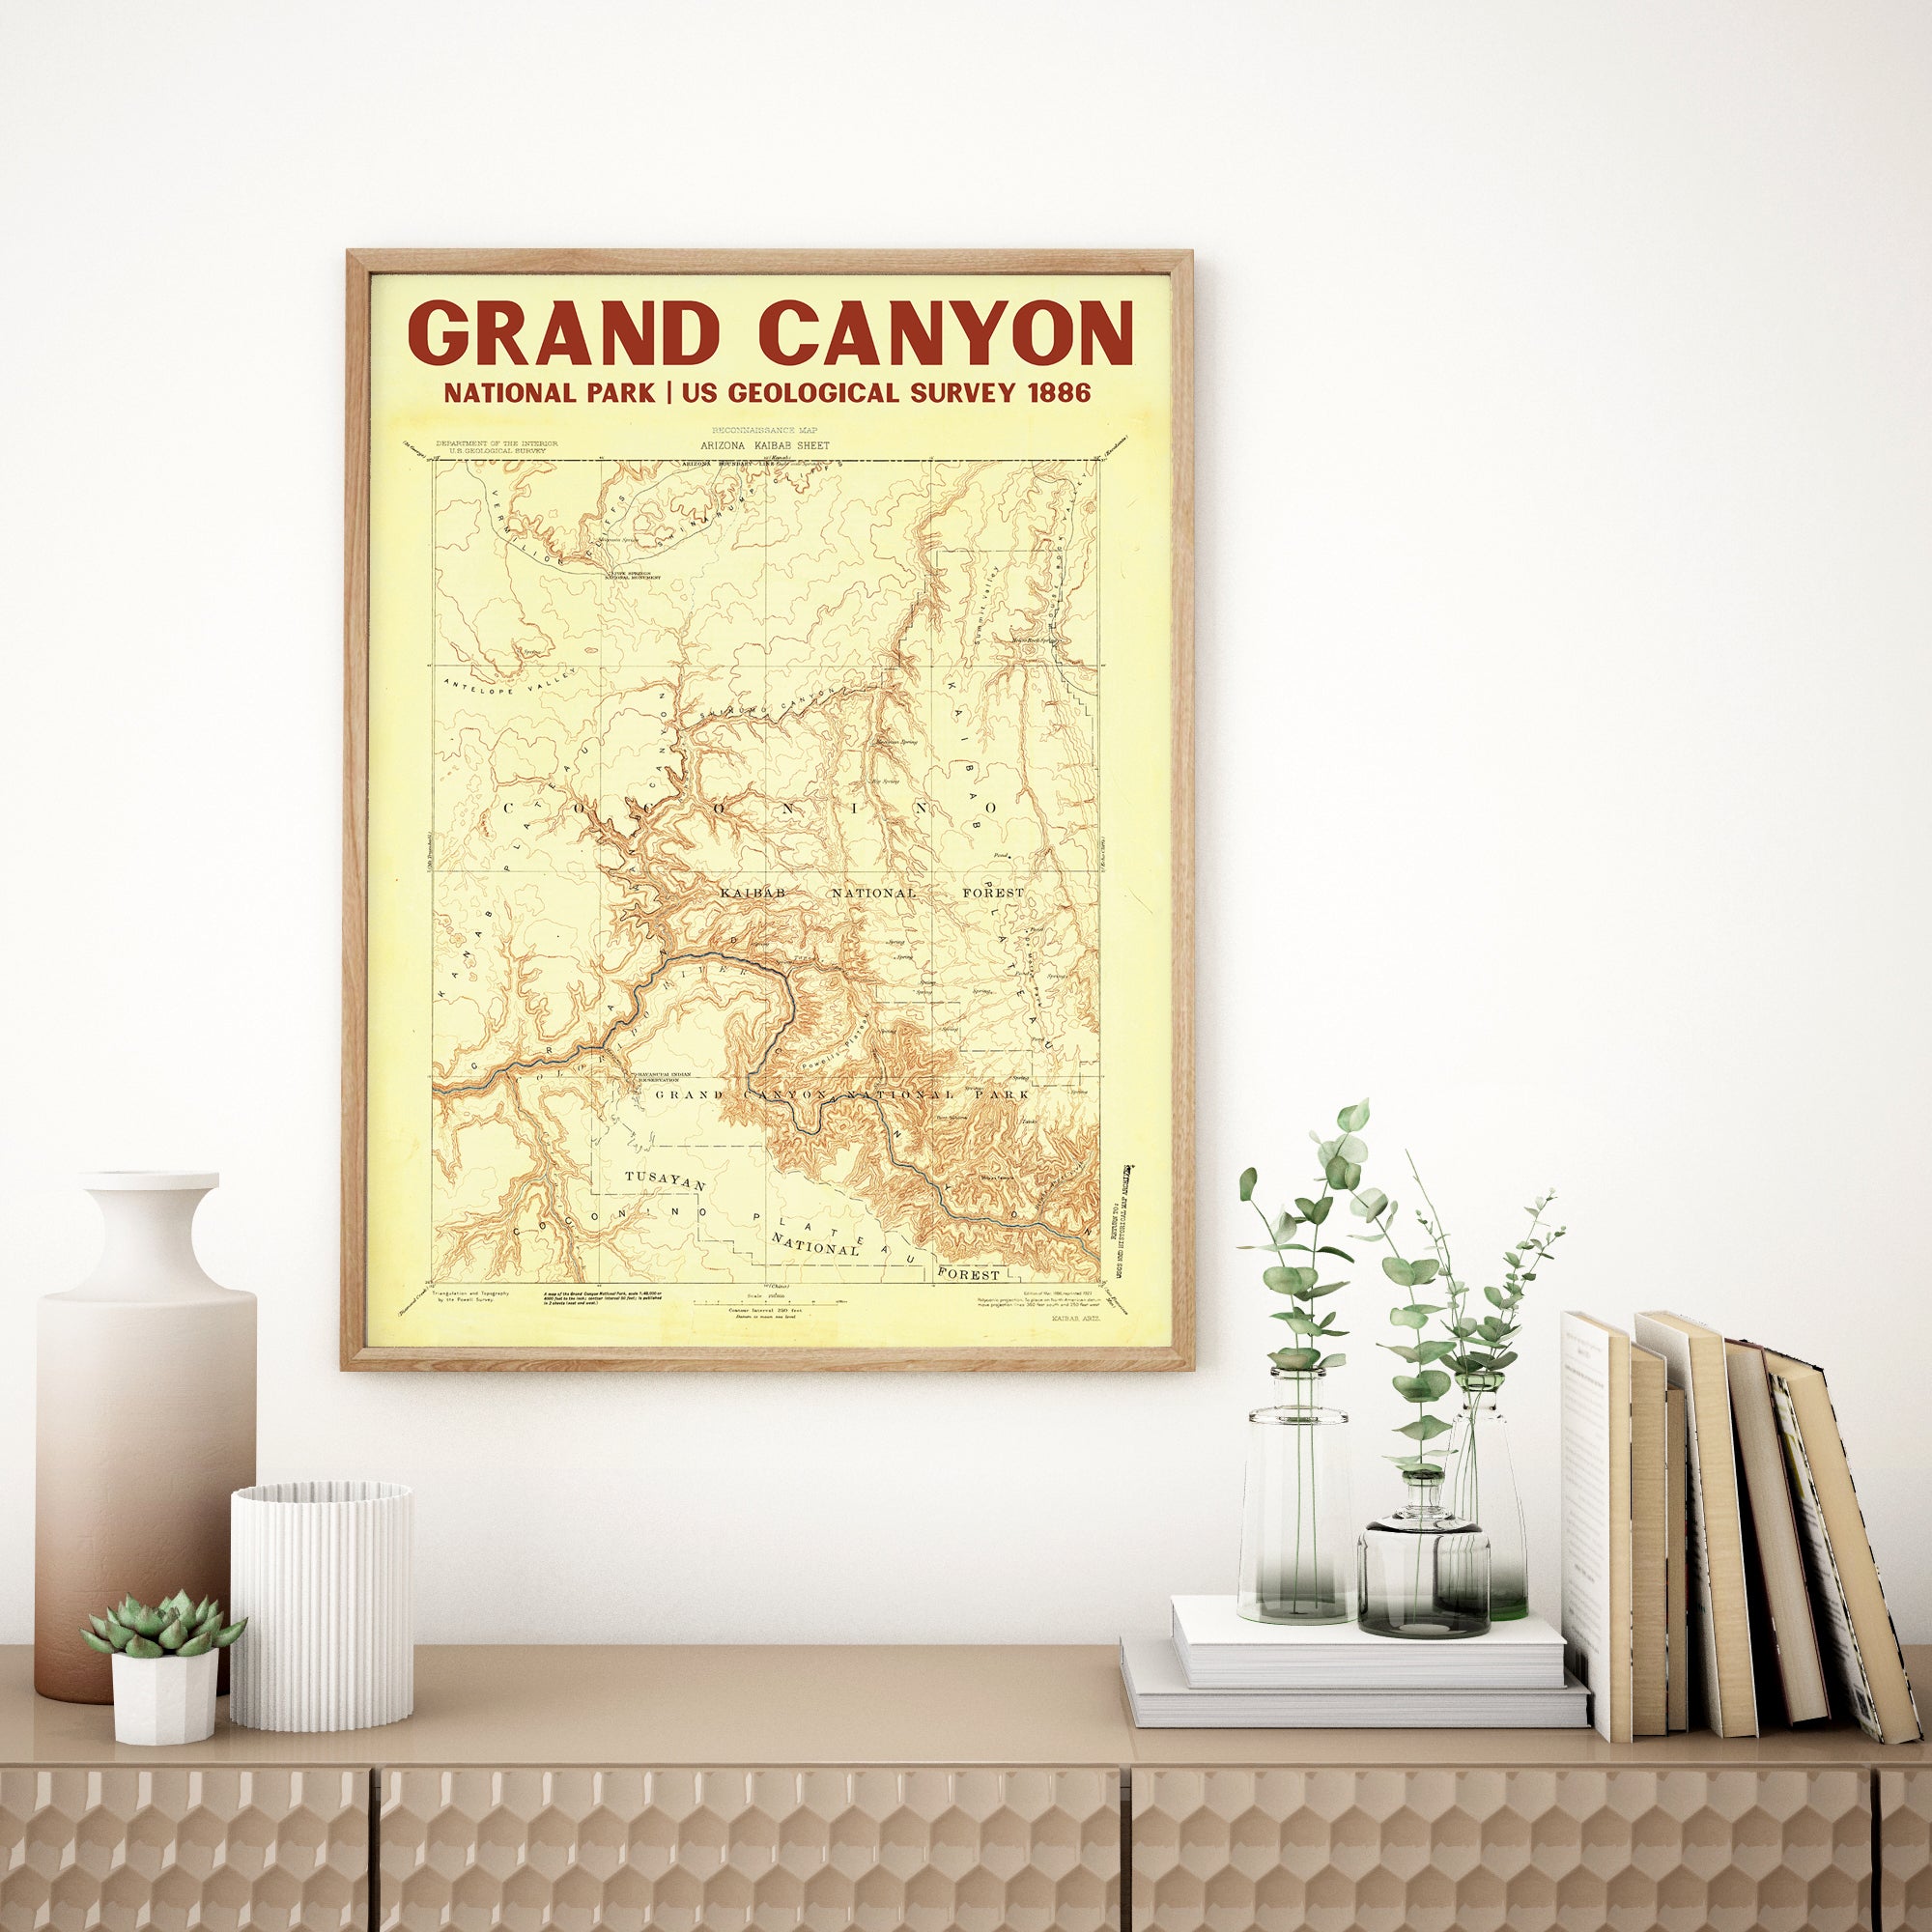 Grand Canyon Poste Adventure | – Vintage 1886 National National Responsibly Park Map USGS Park